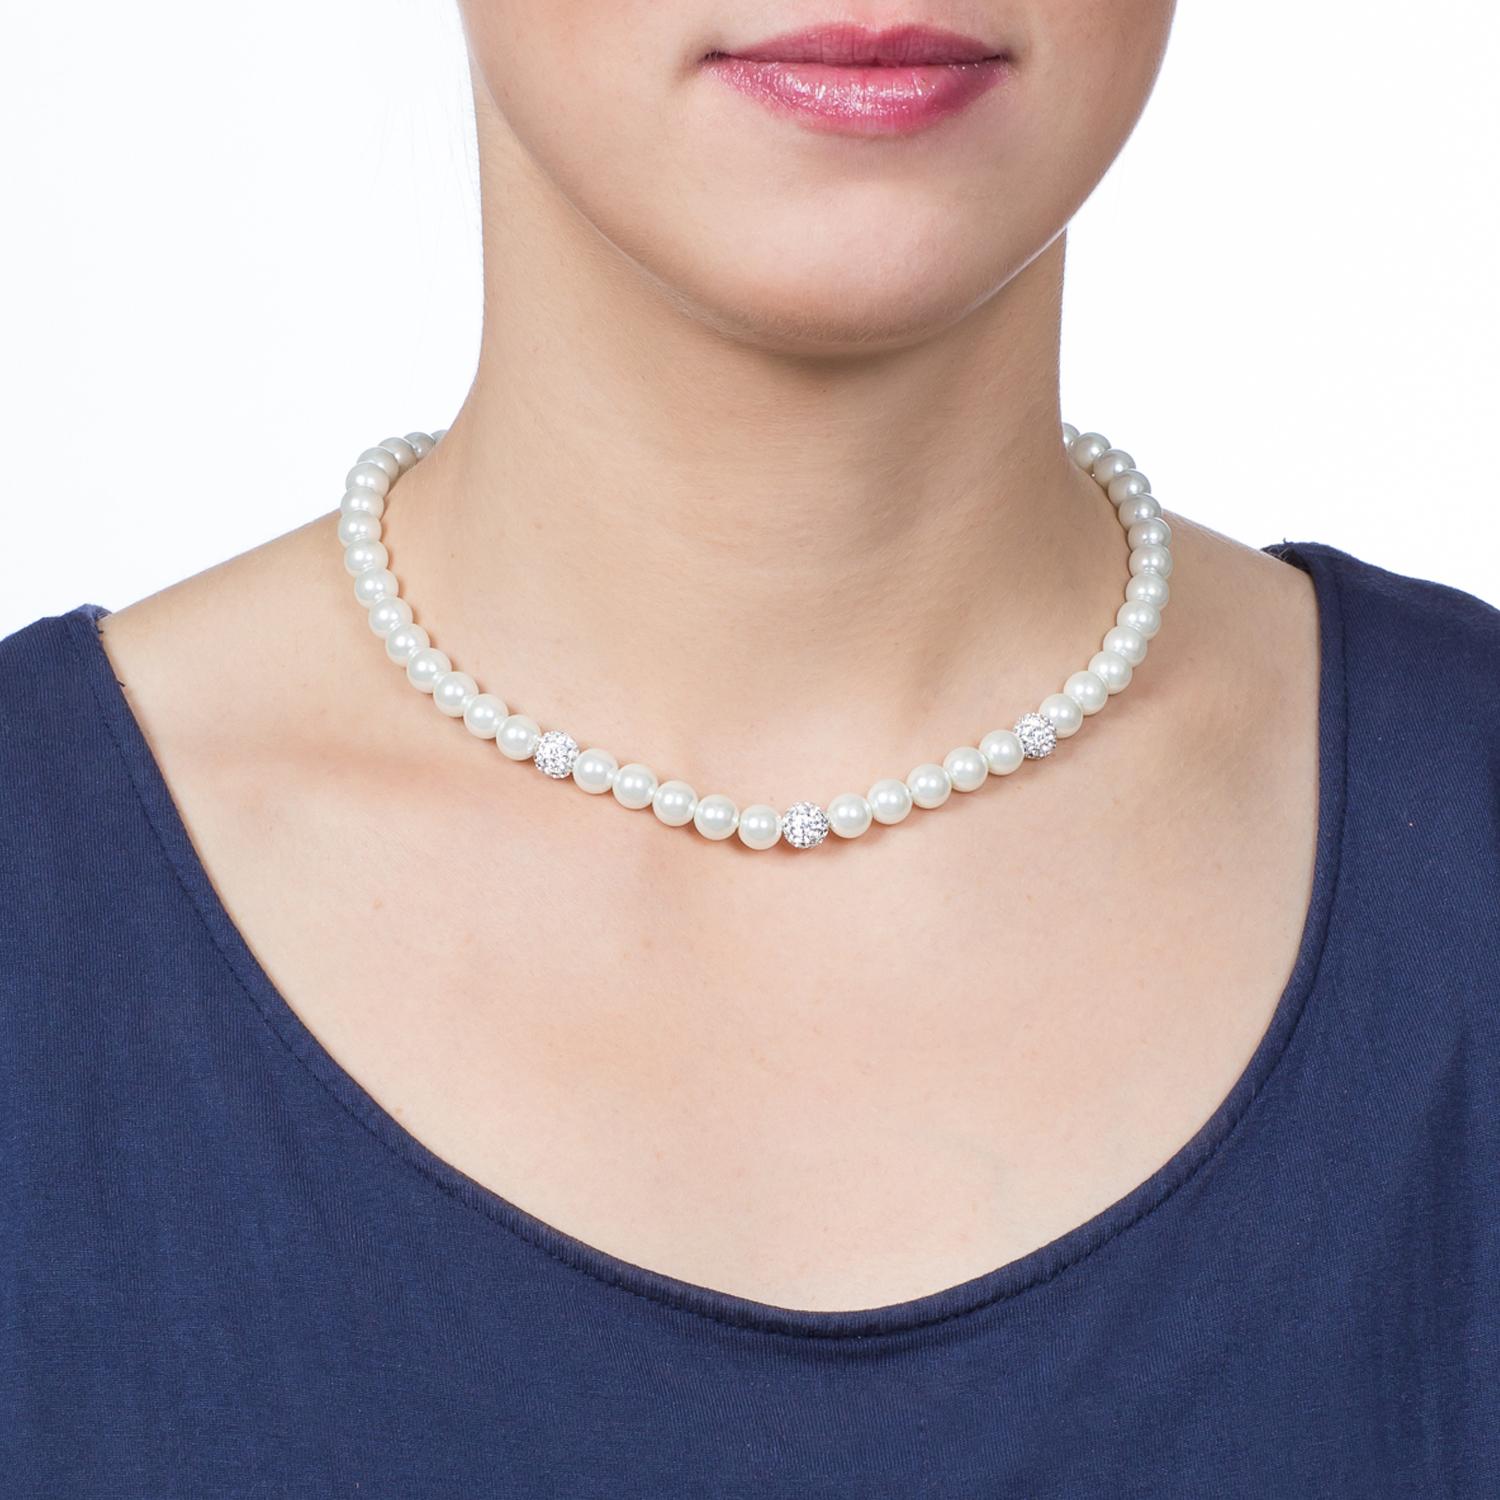 Necklace - Rhinestone Beads